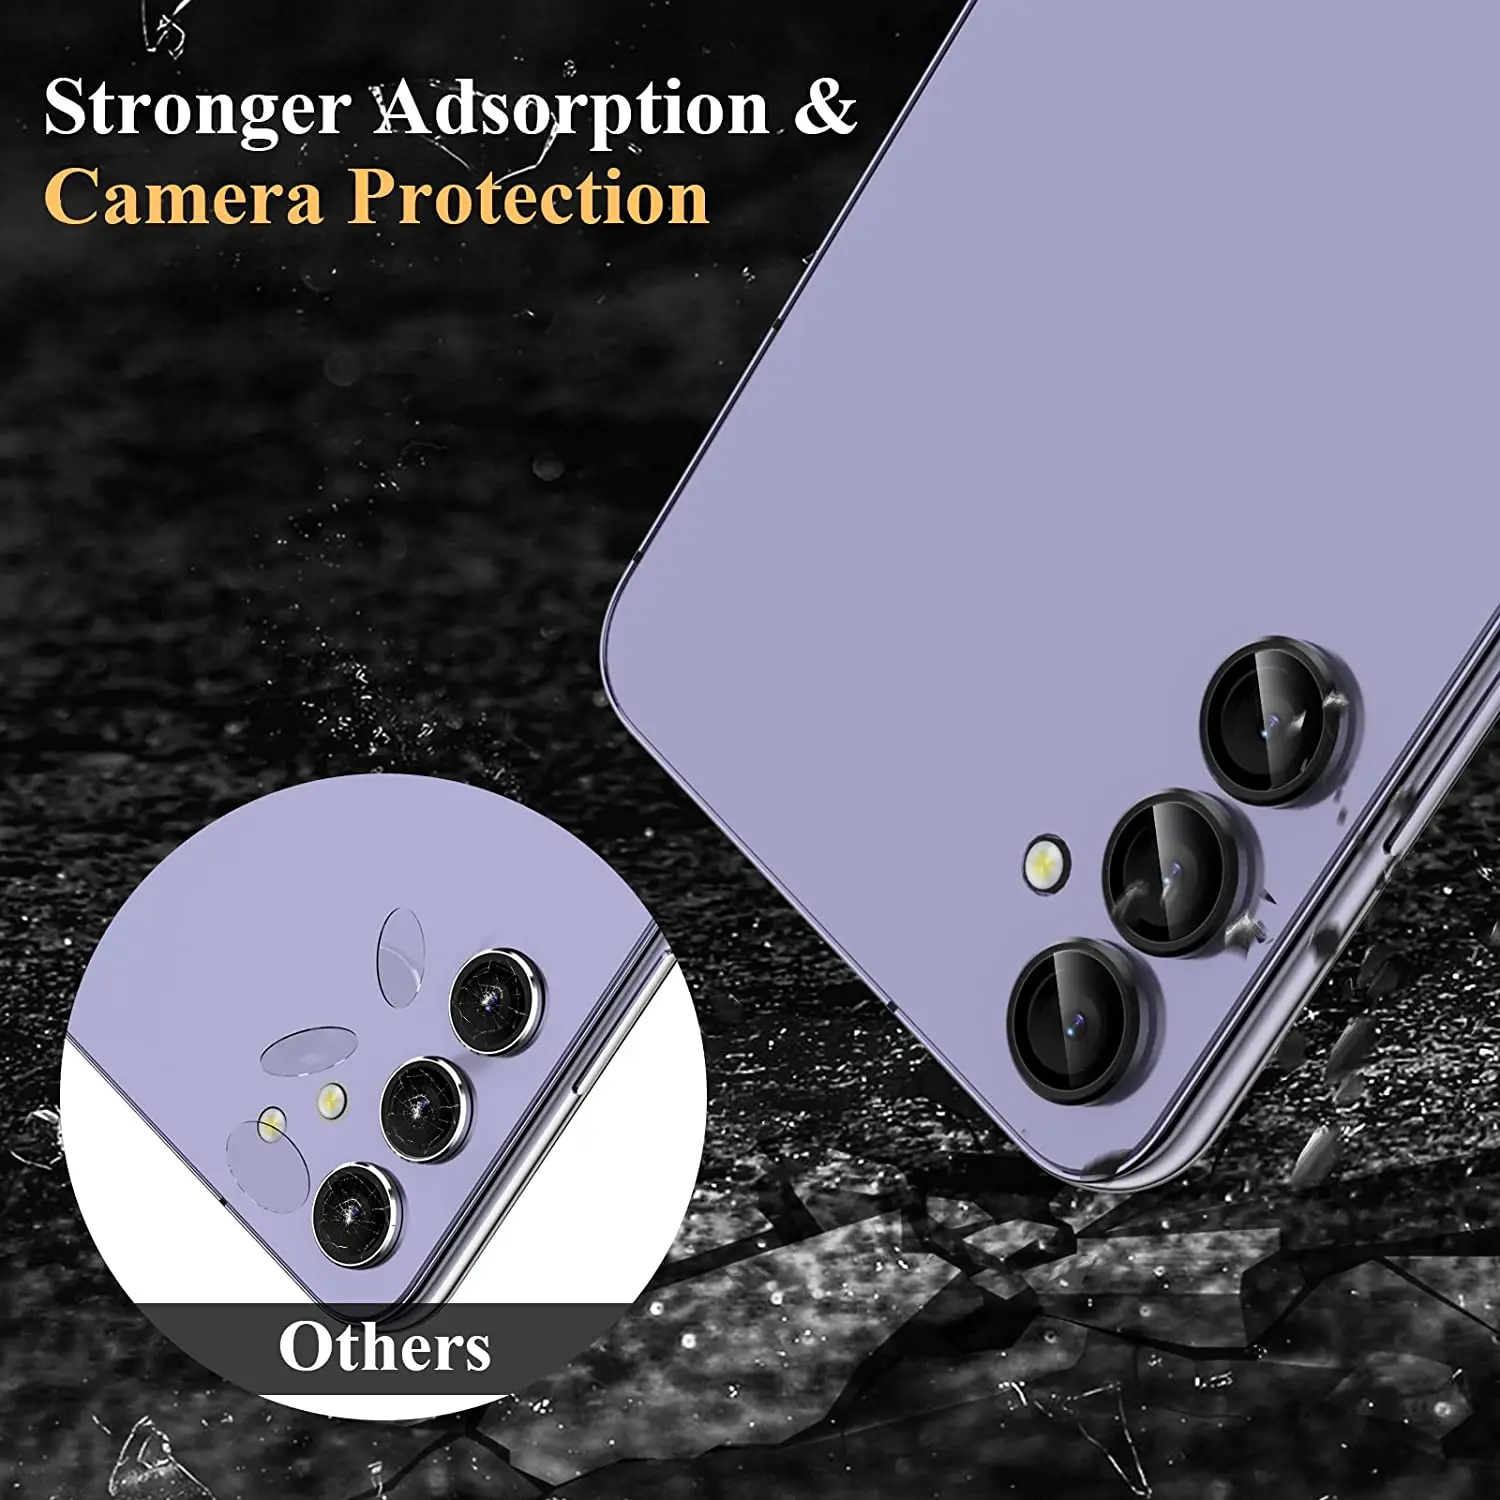 محافظ لنز دوربین Samsung Galaxy A35 مدل رینگی